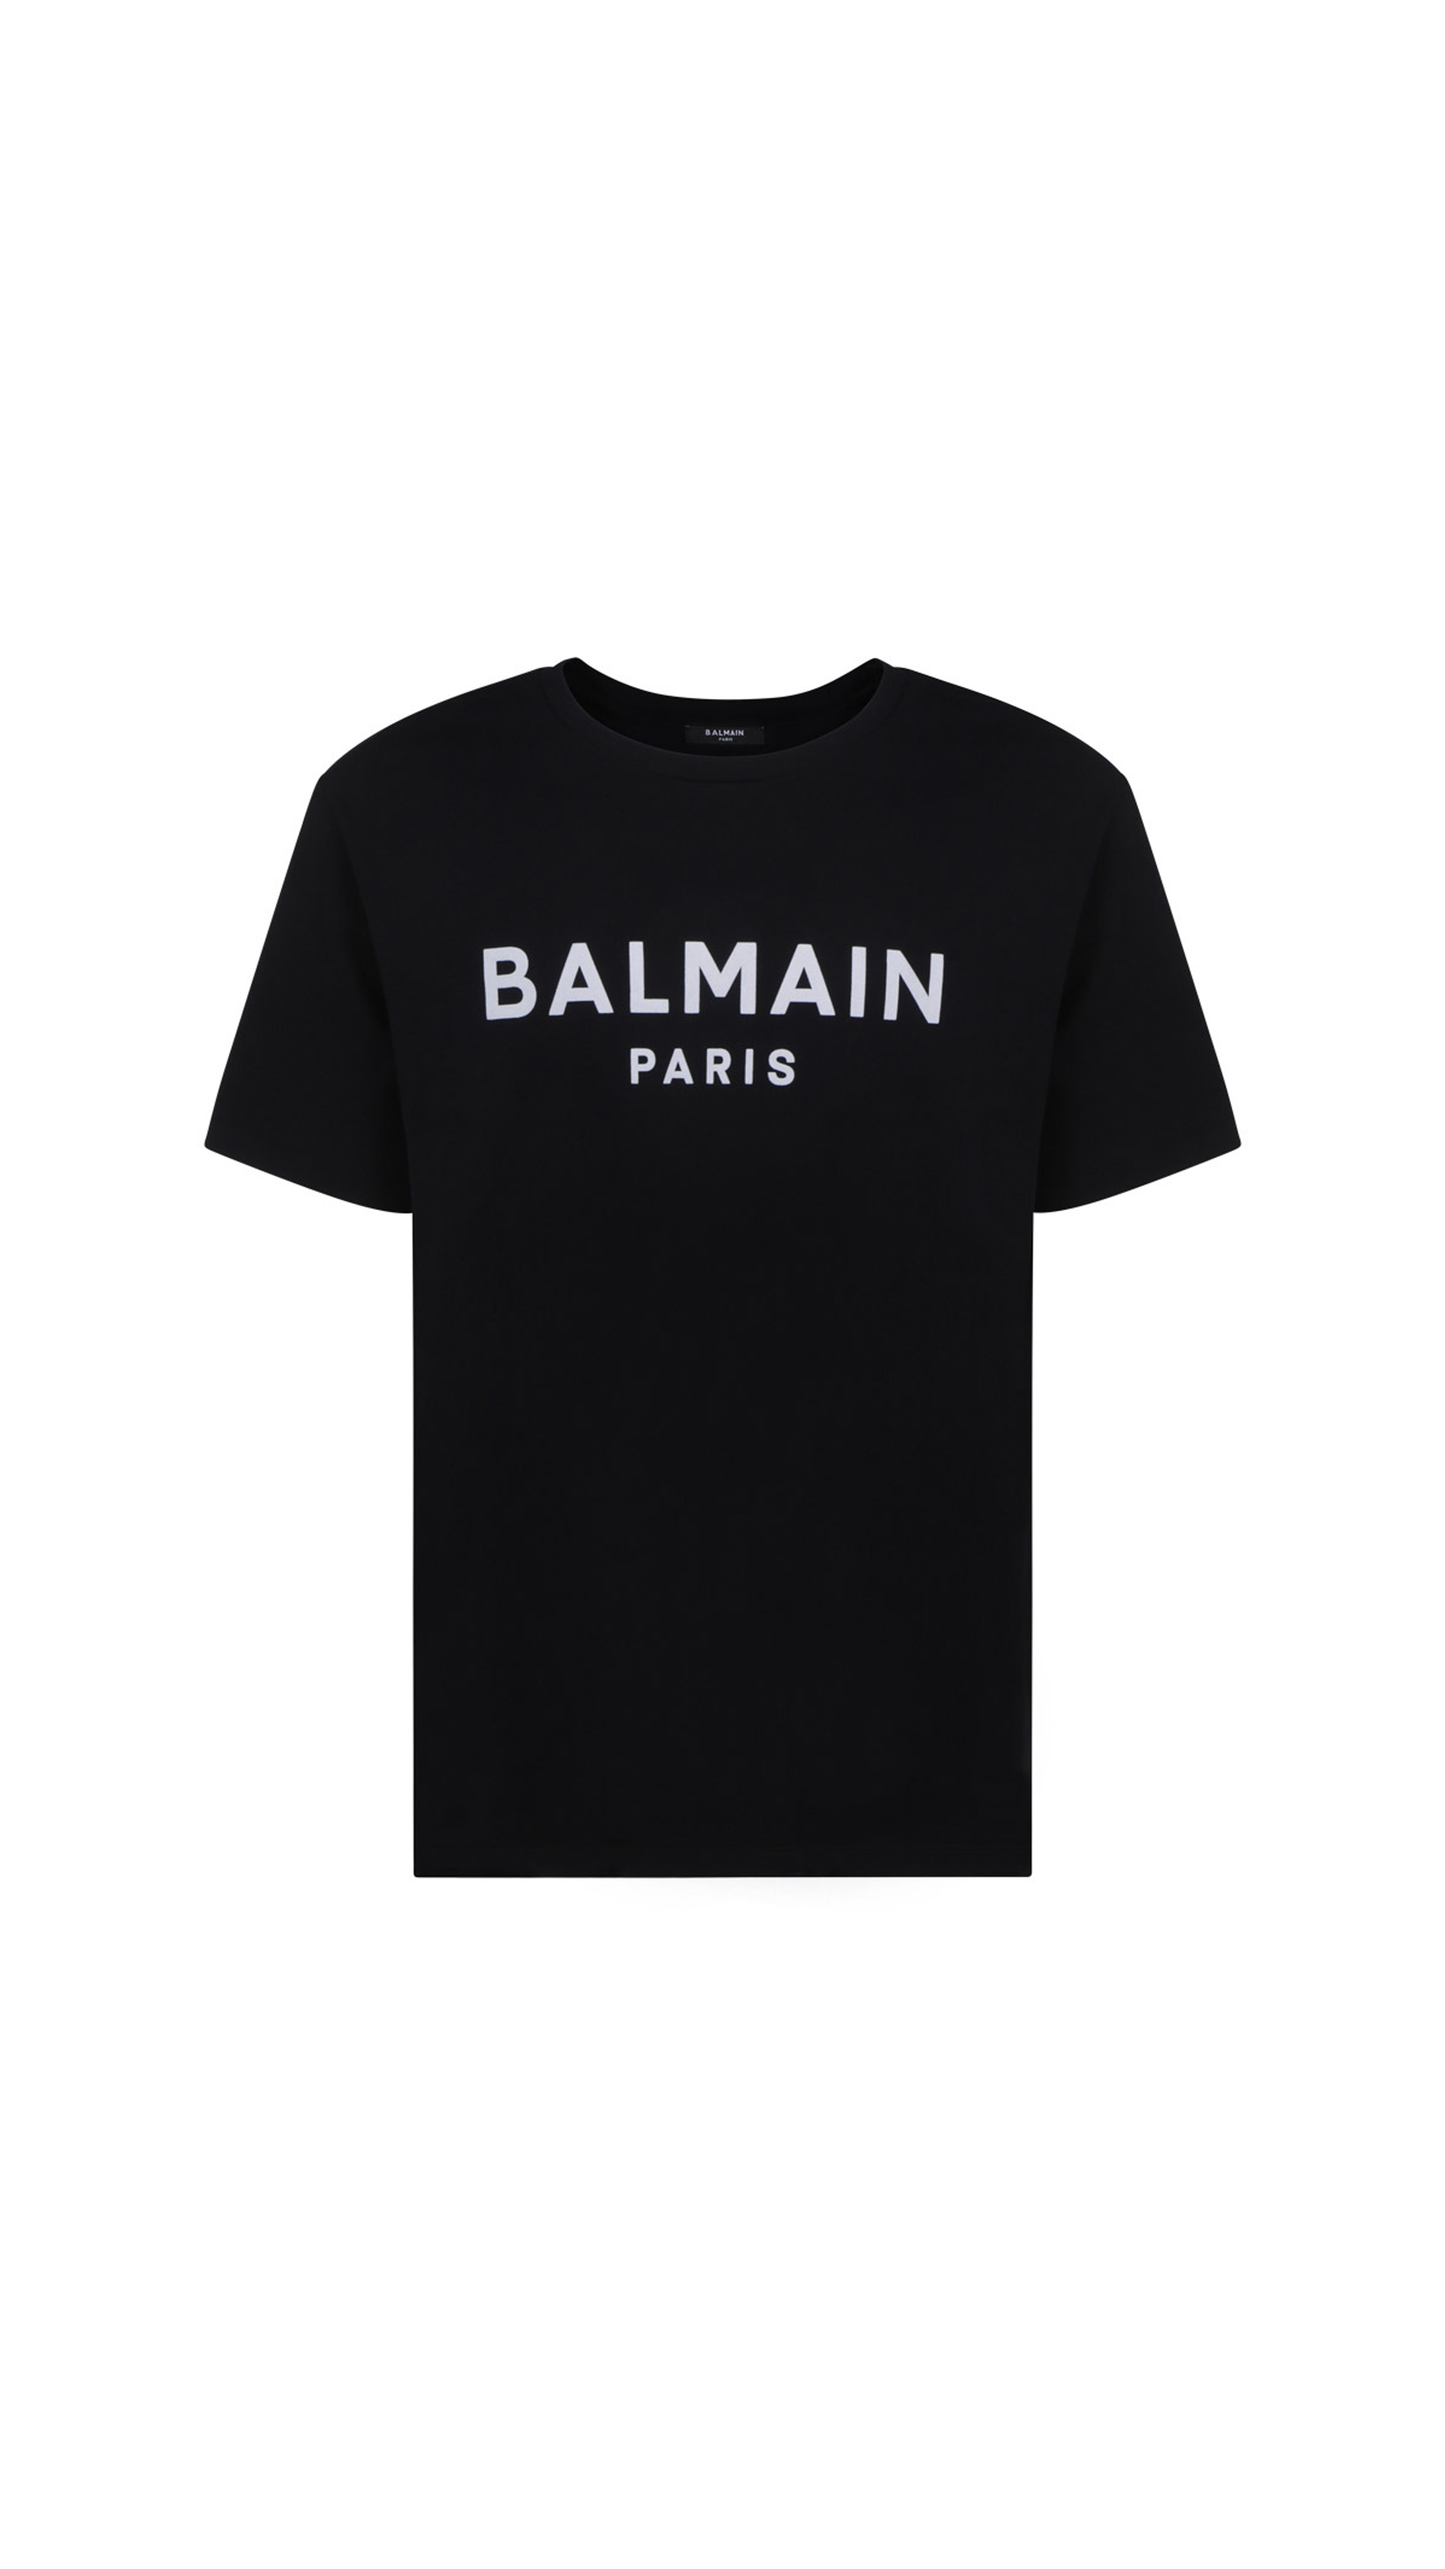 Cotton T-Shirt with Balmain Paris Logo Print - Black.